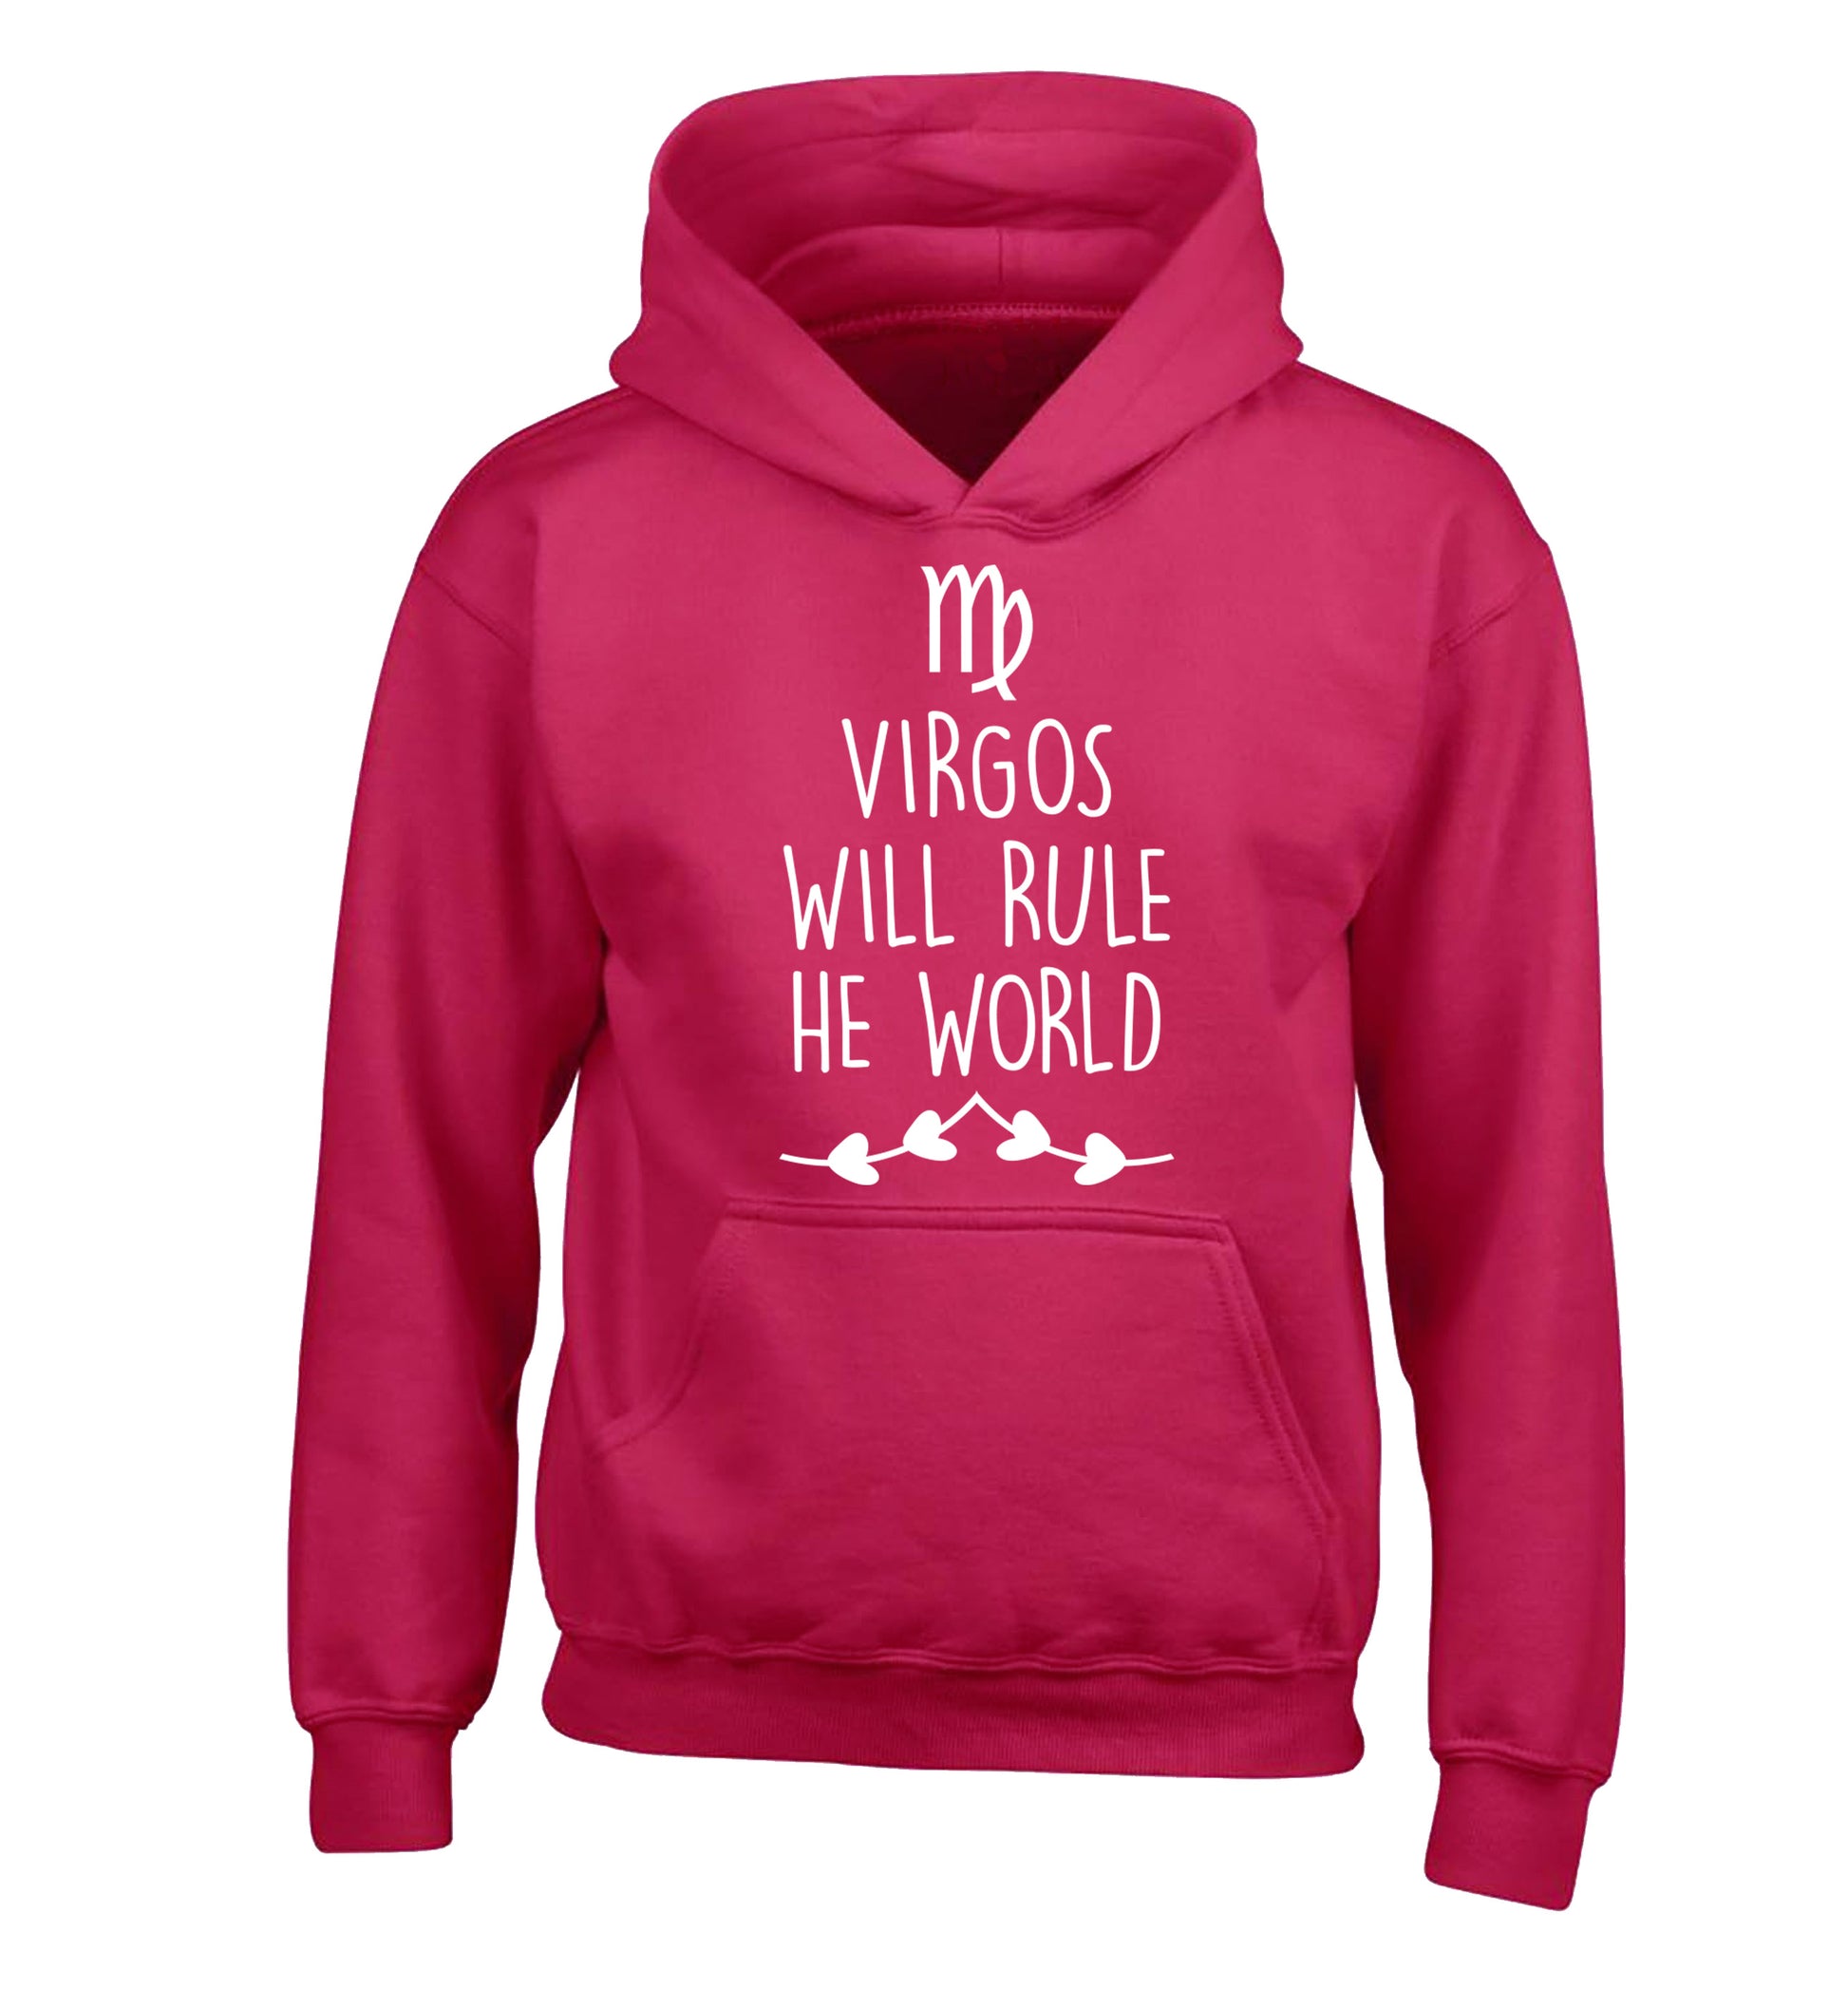 Virgos will rule the world children's pink hoodie 12-13 Years